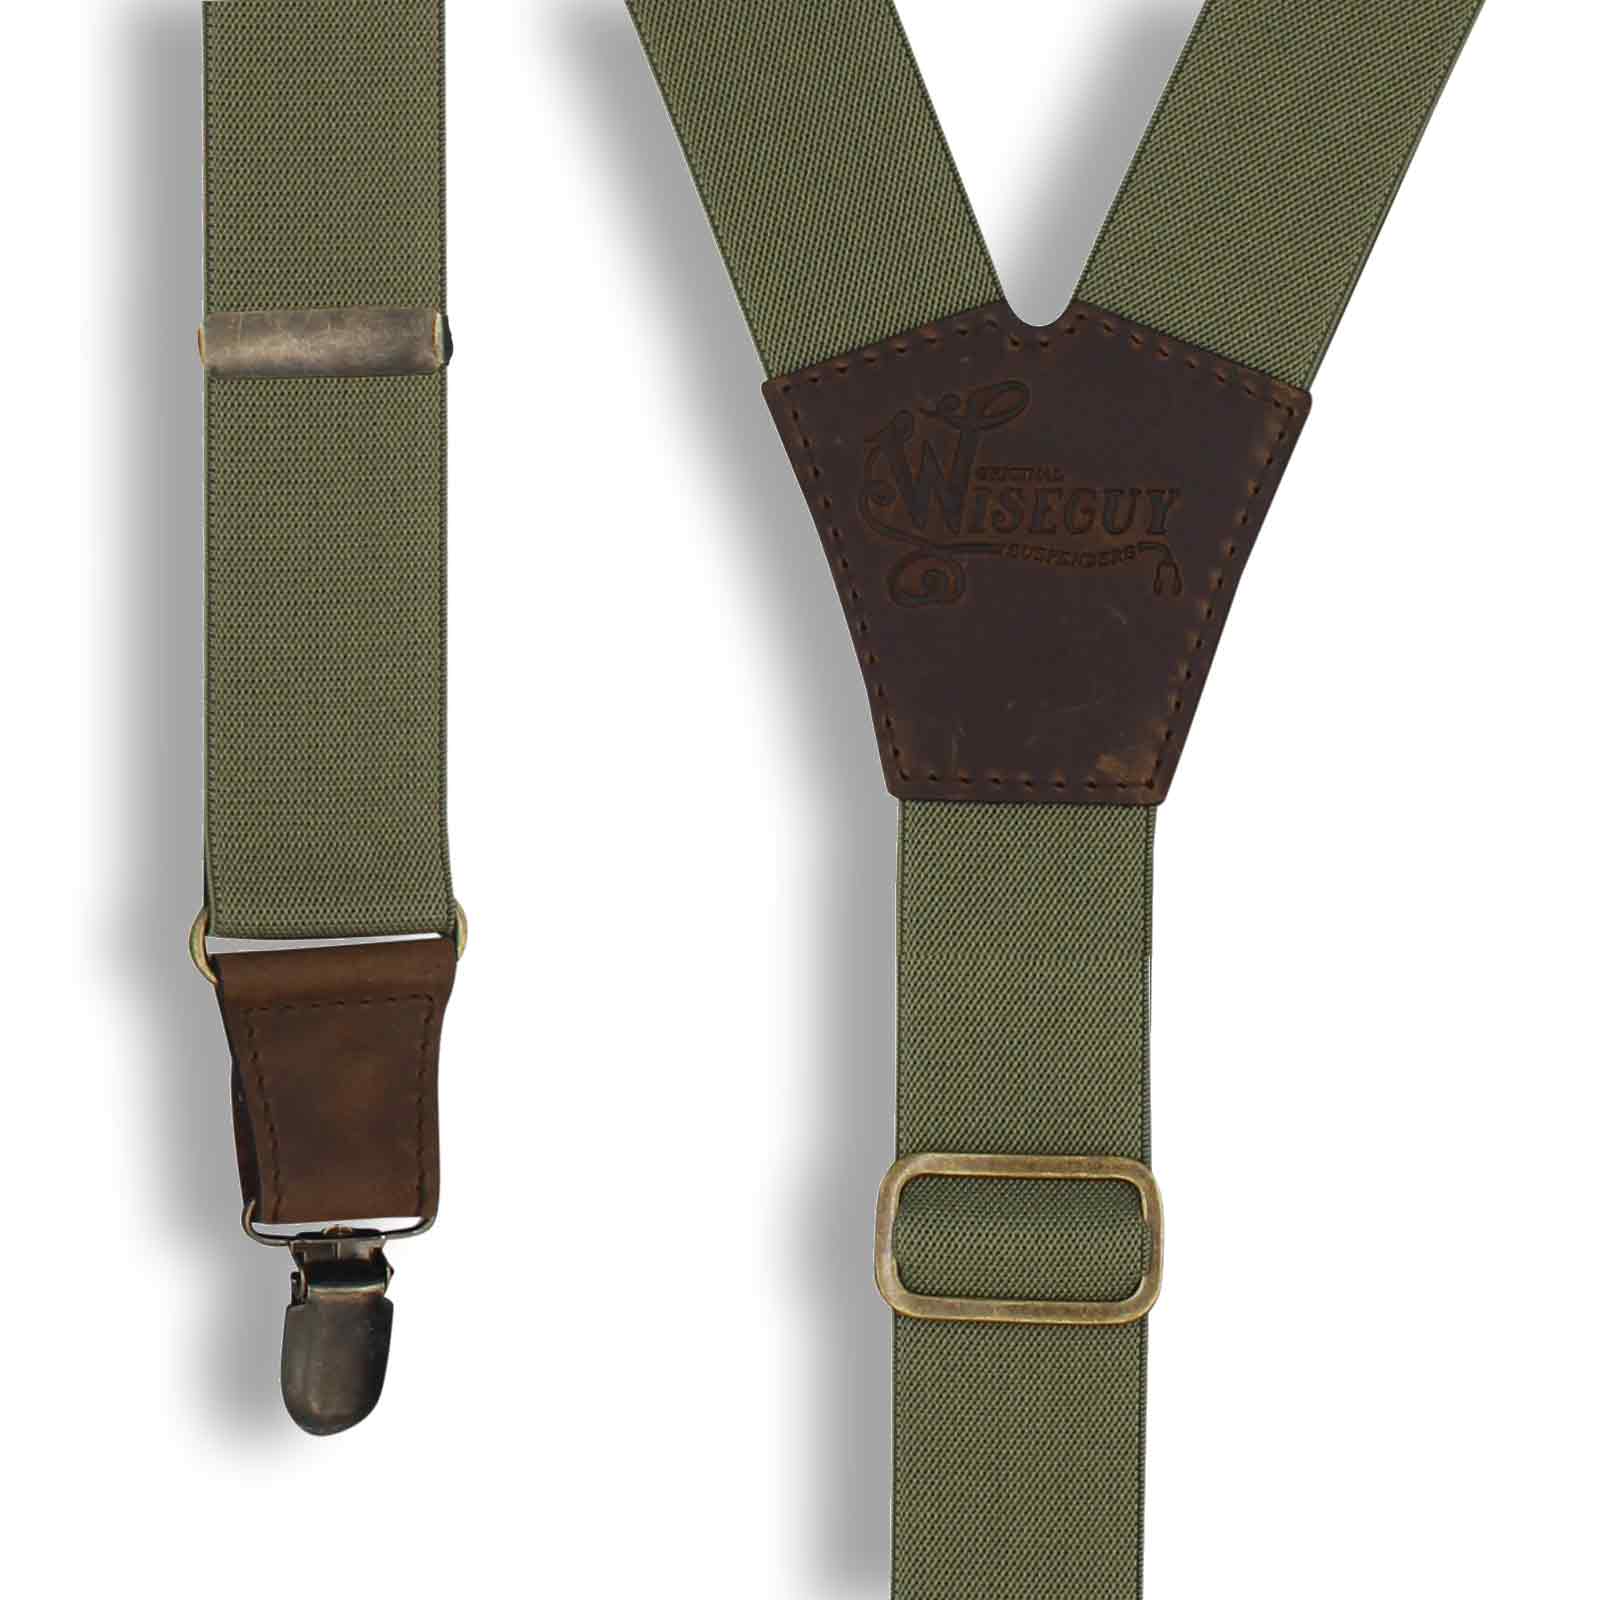 Khaki Green on Dark Brown Suspenders wide straps (1.36 inch/ 3.5 cm) - Wiseguy Suspenders